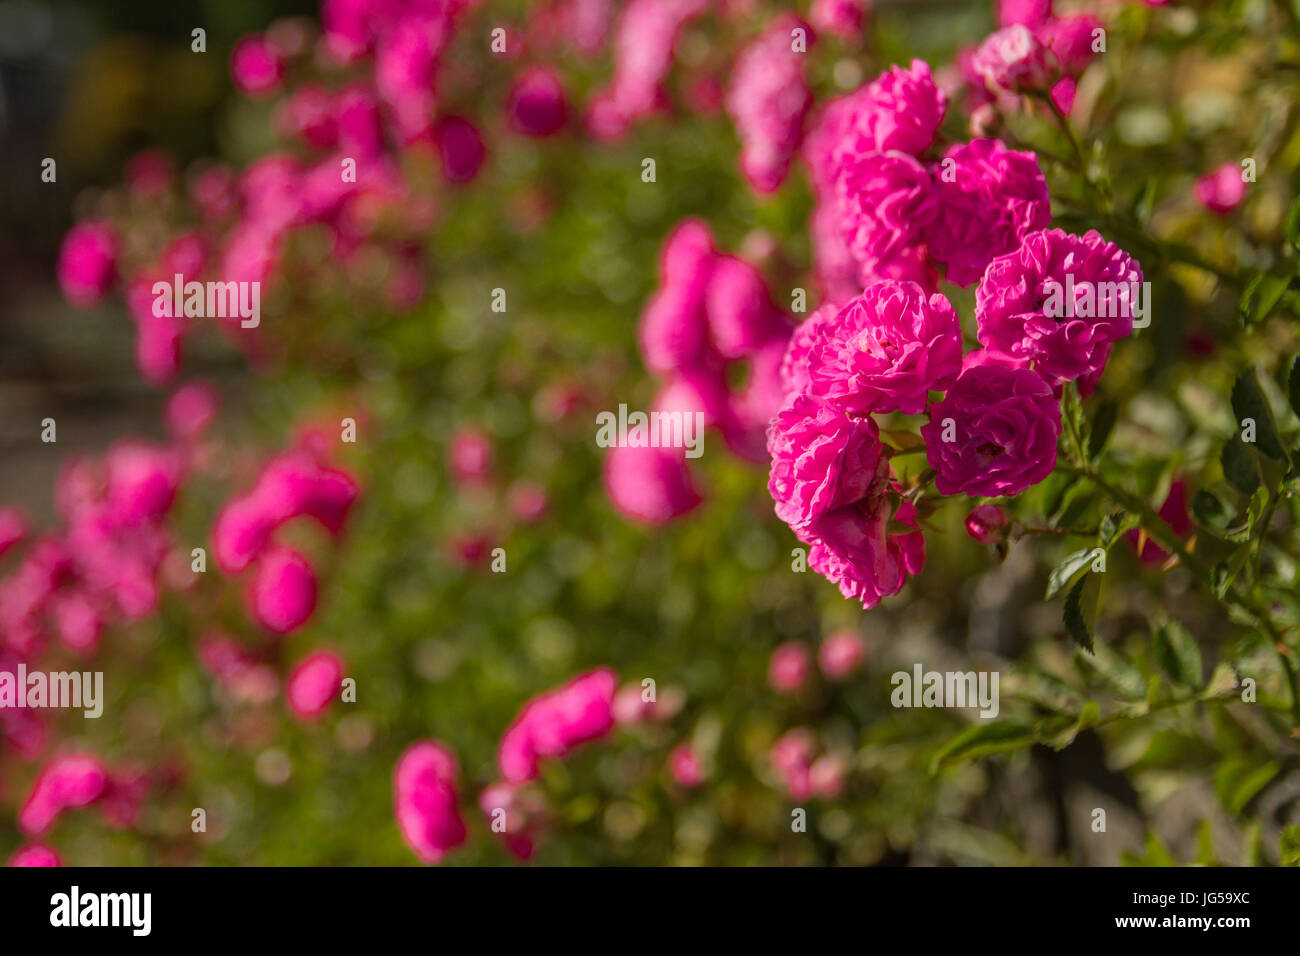 Bush of pink purple rose in summer sunlight. Macro close up photography. Stock Photo